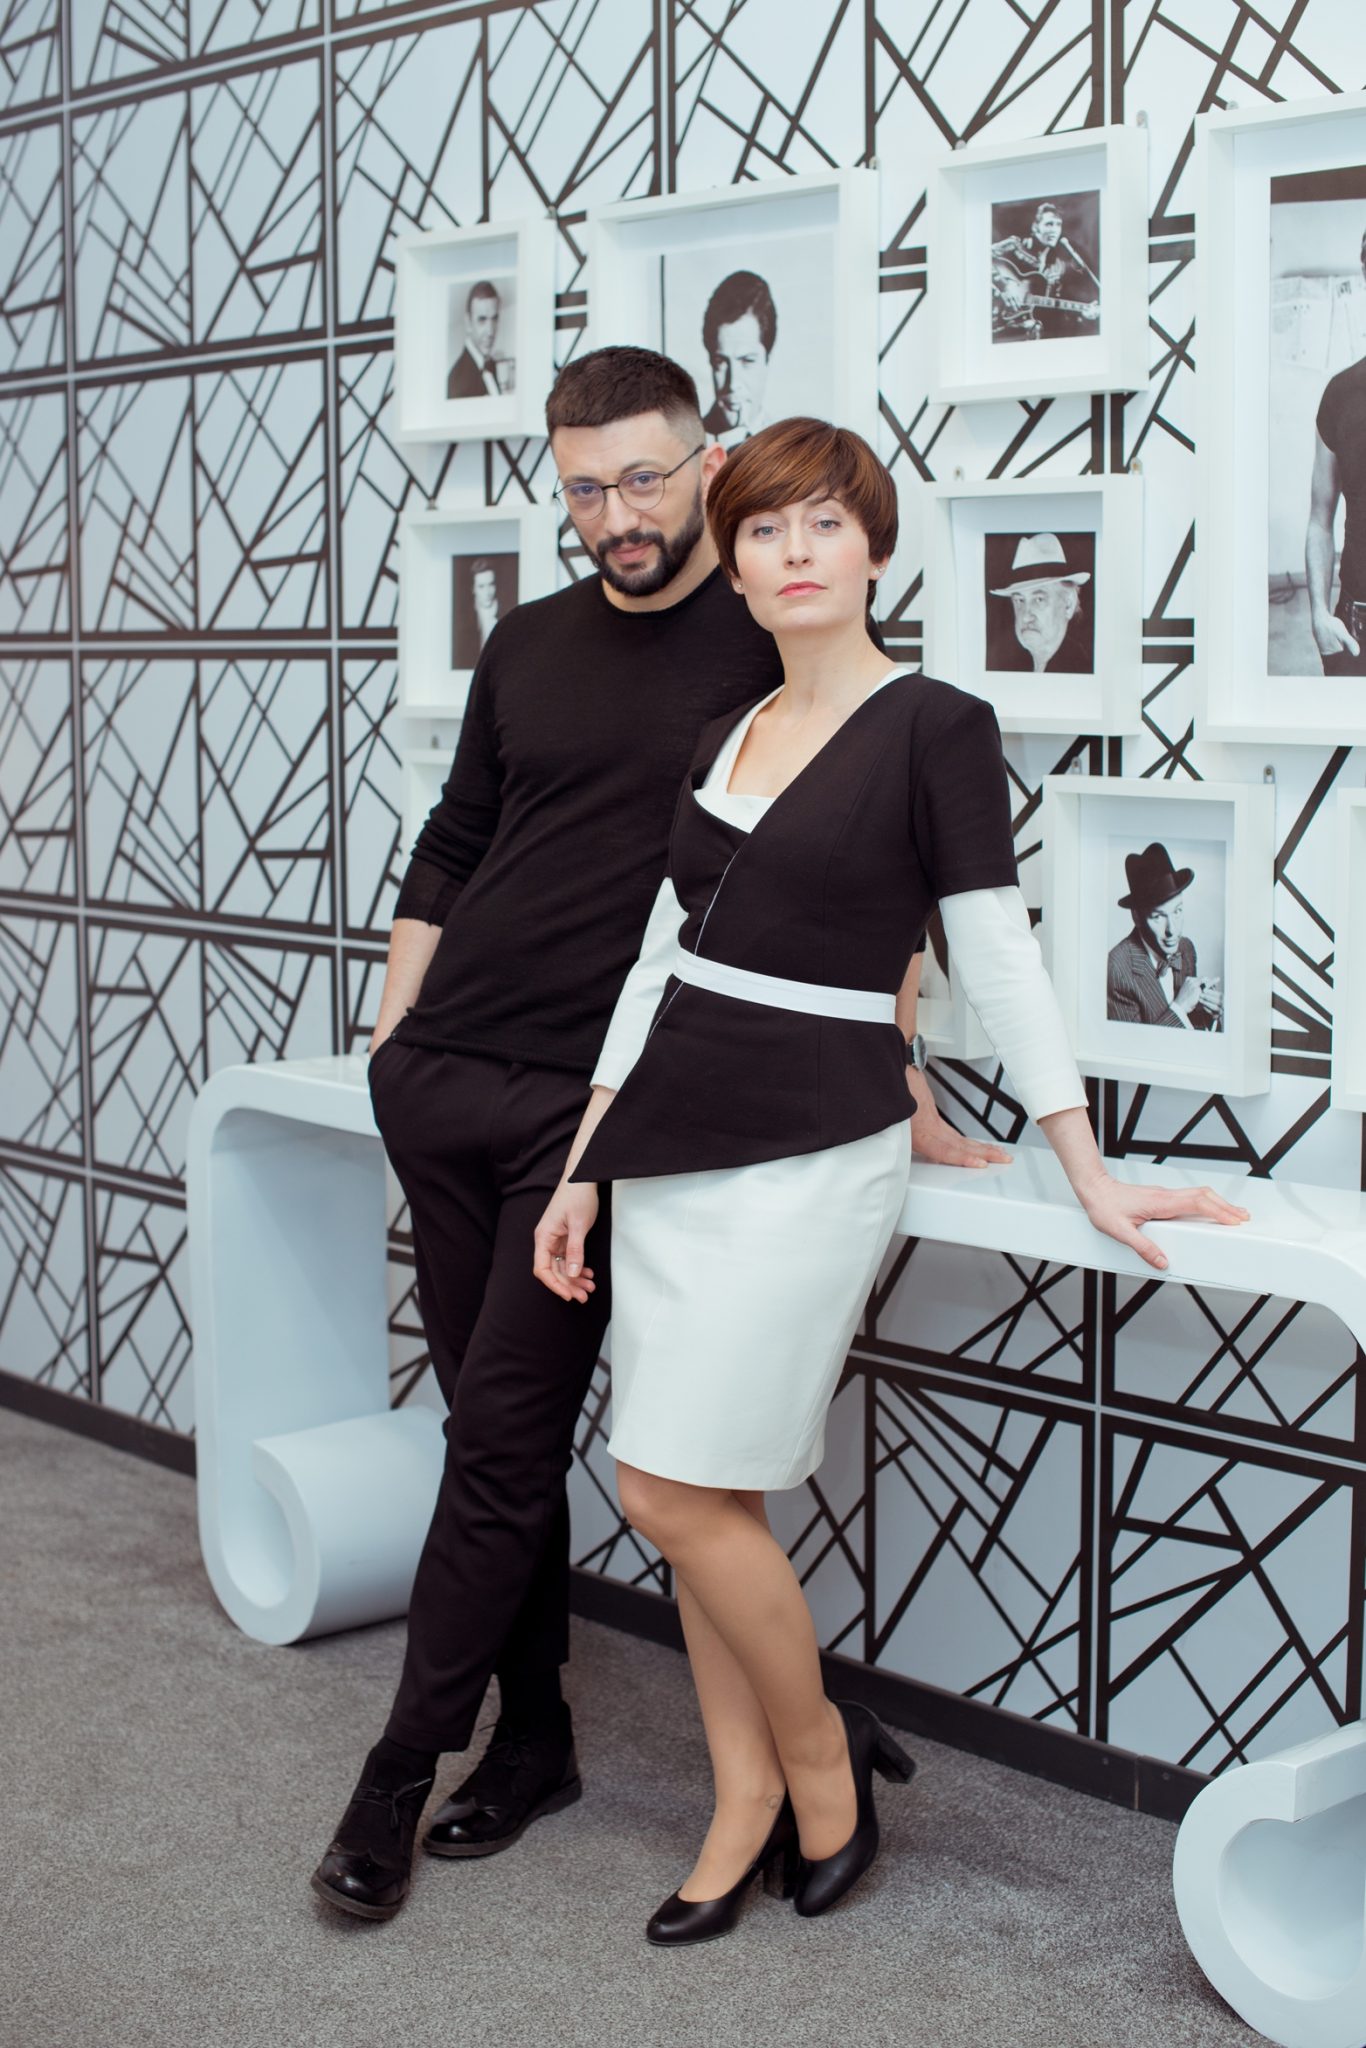 Україна запускає другий сезон шоу Місія краса